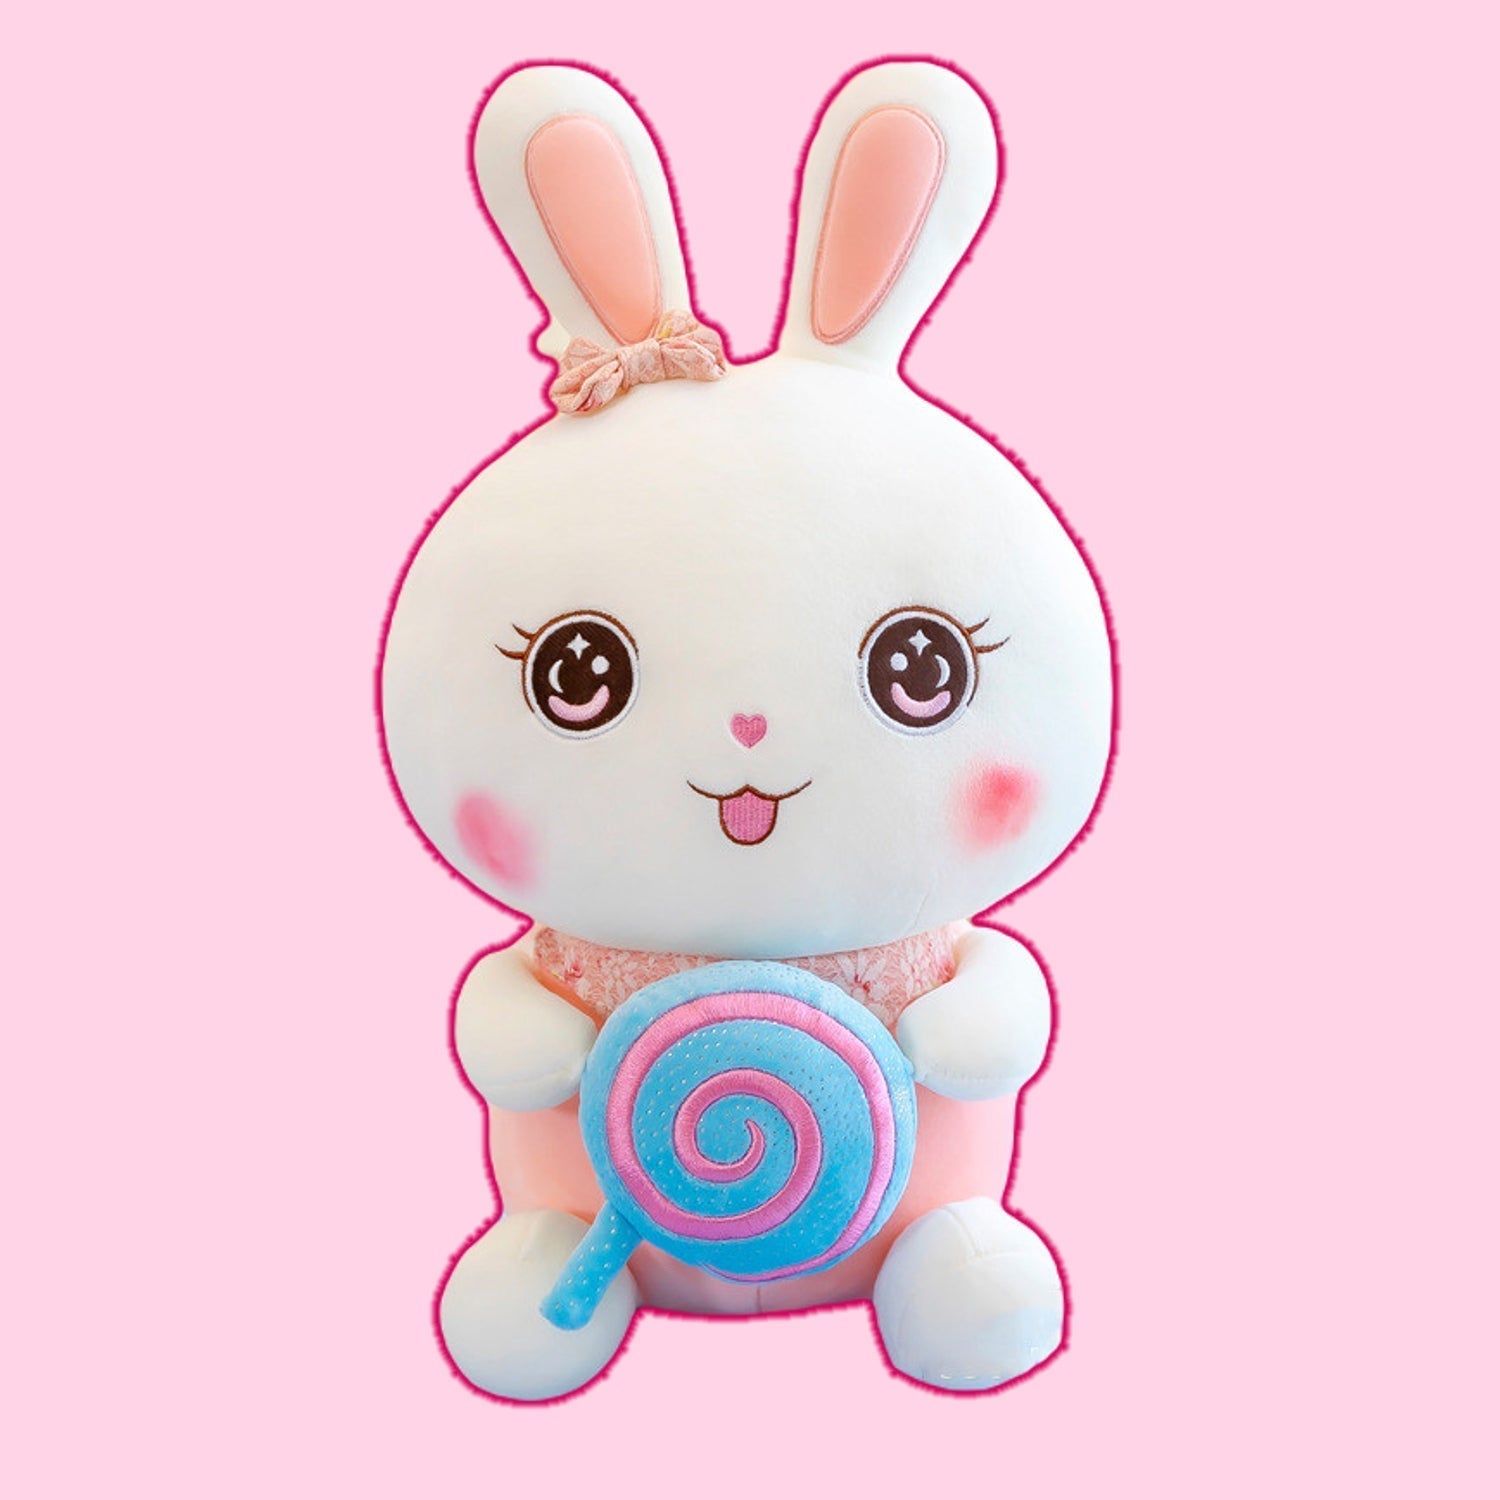 Kawaii Candy Bunny Plush Toy